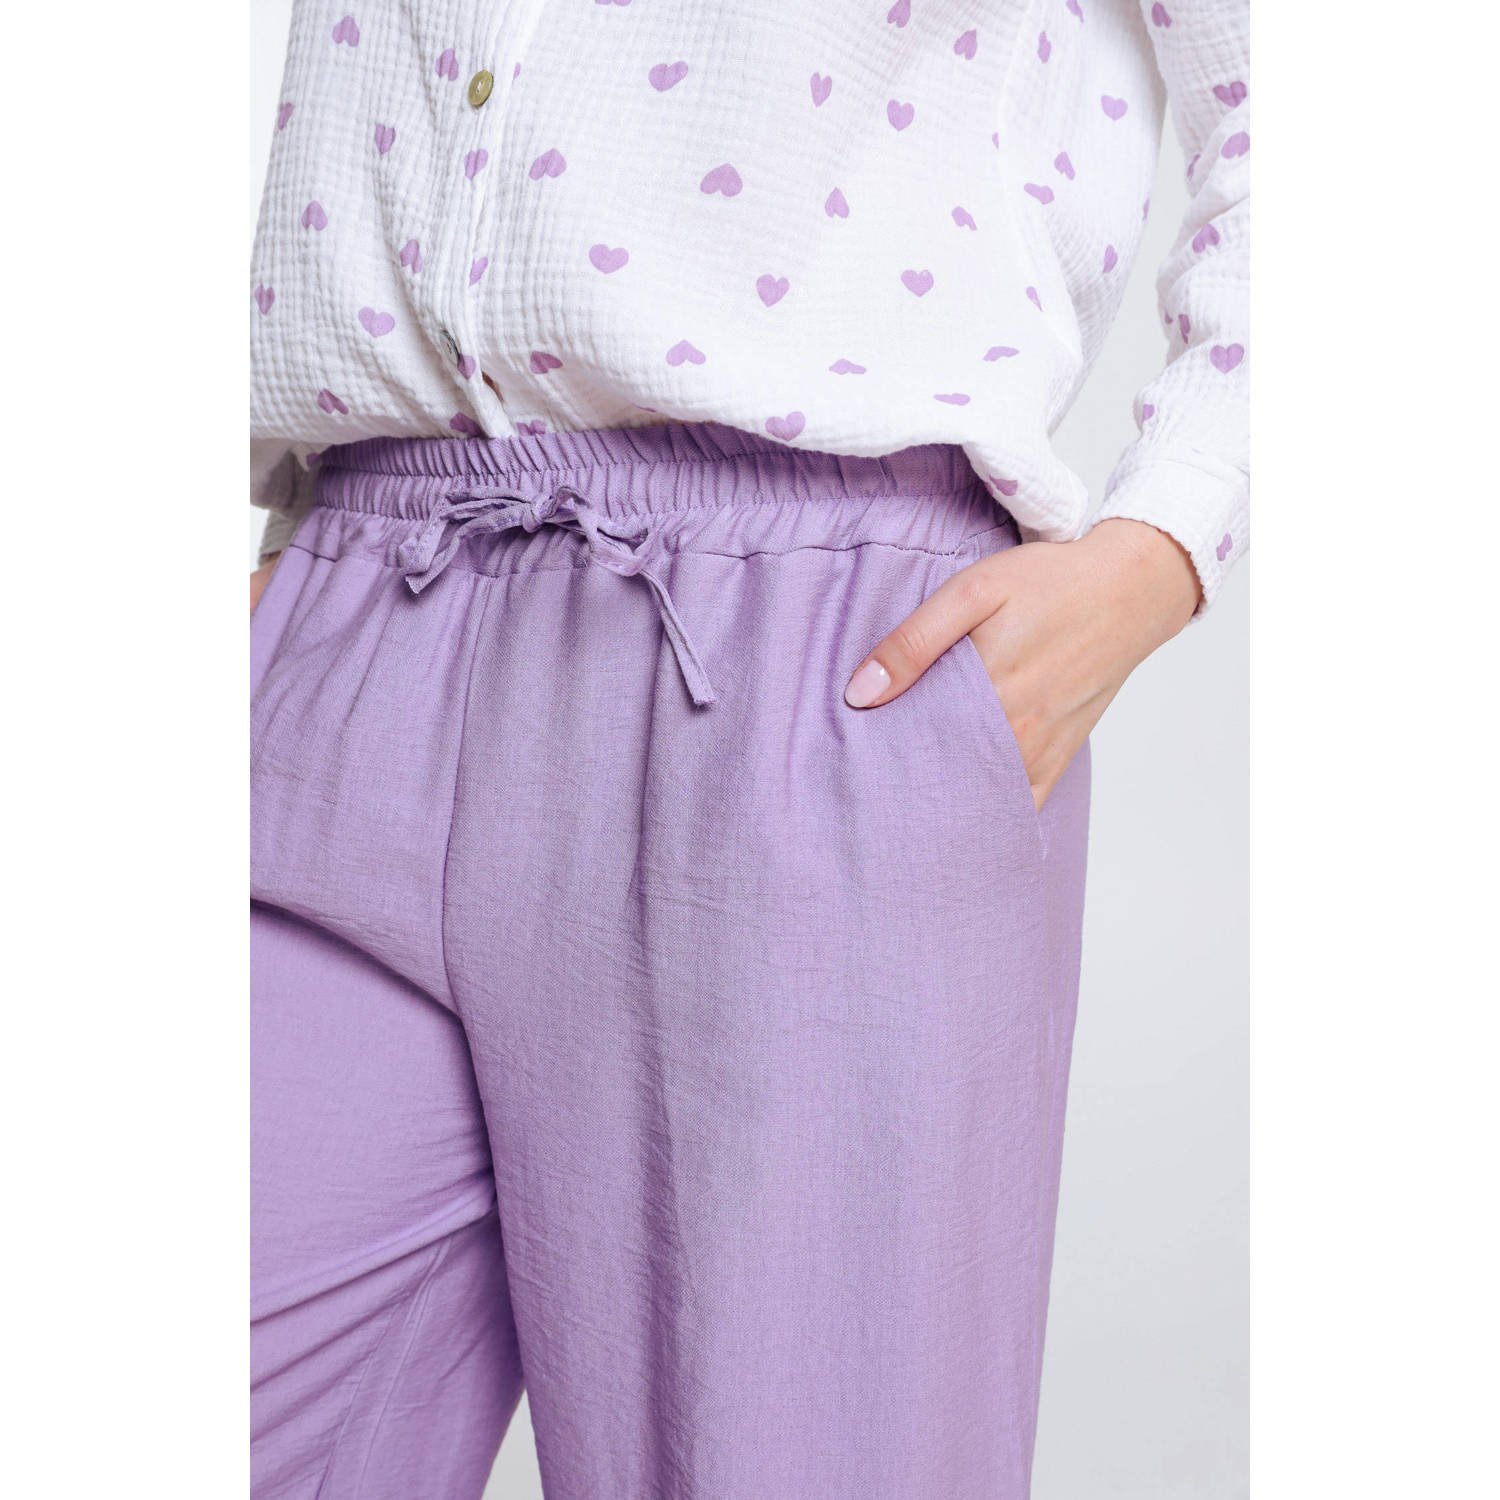 Cassis wide leg pantalon lila